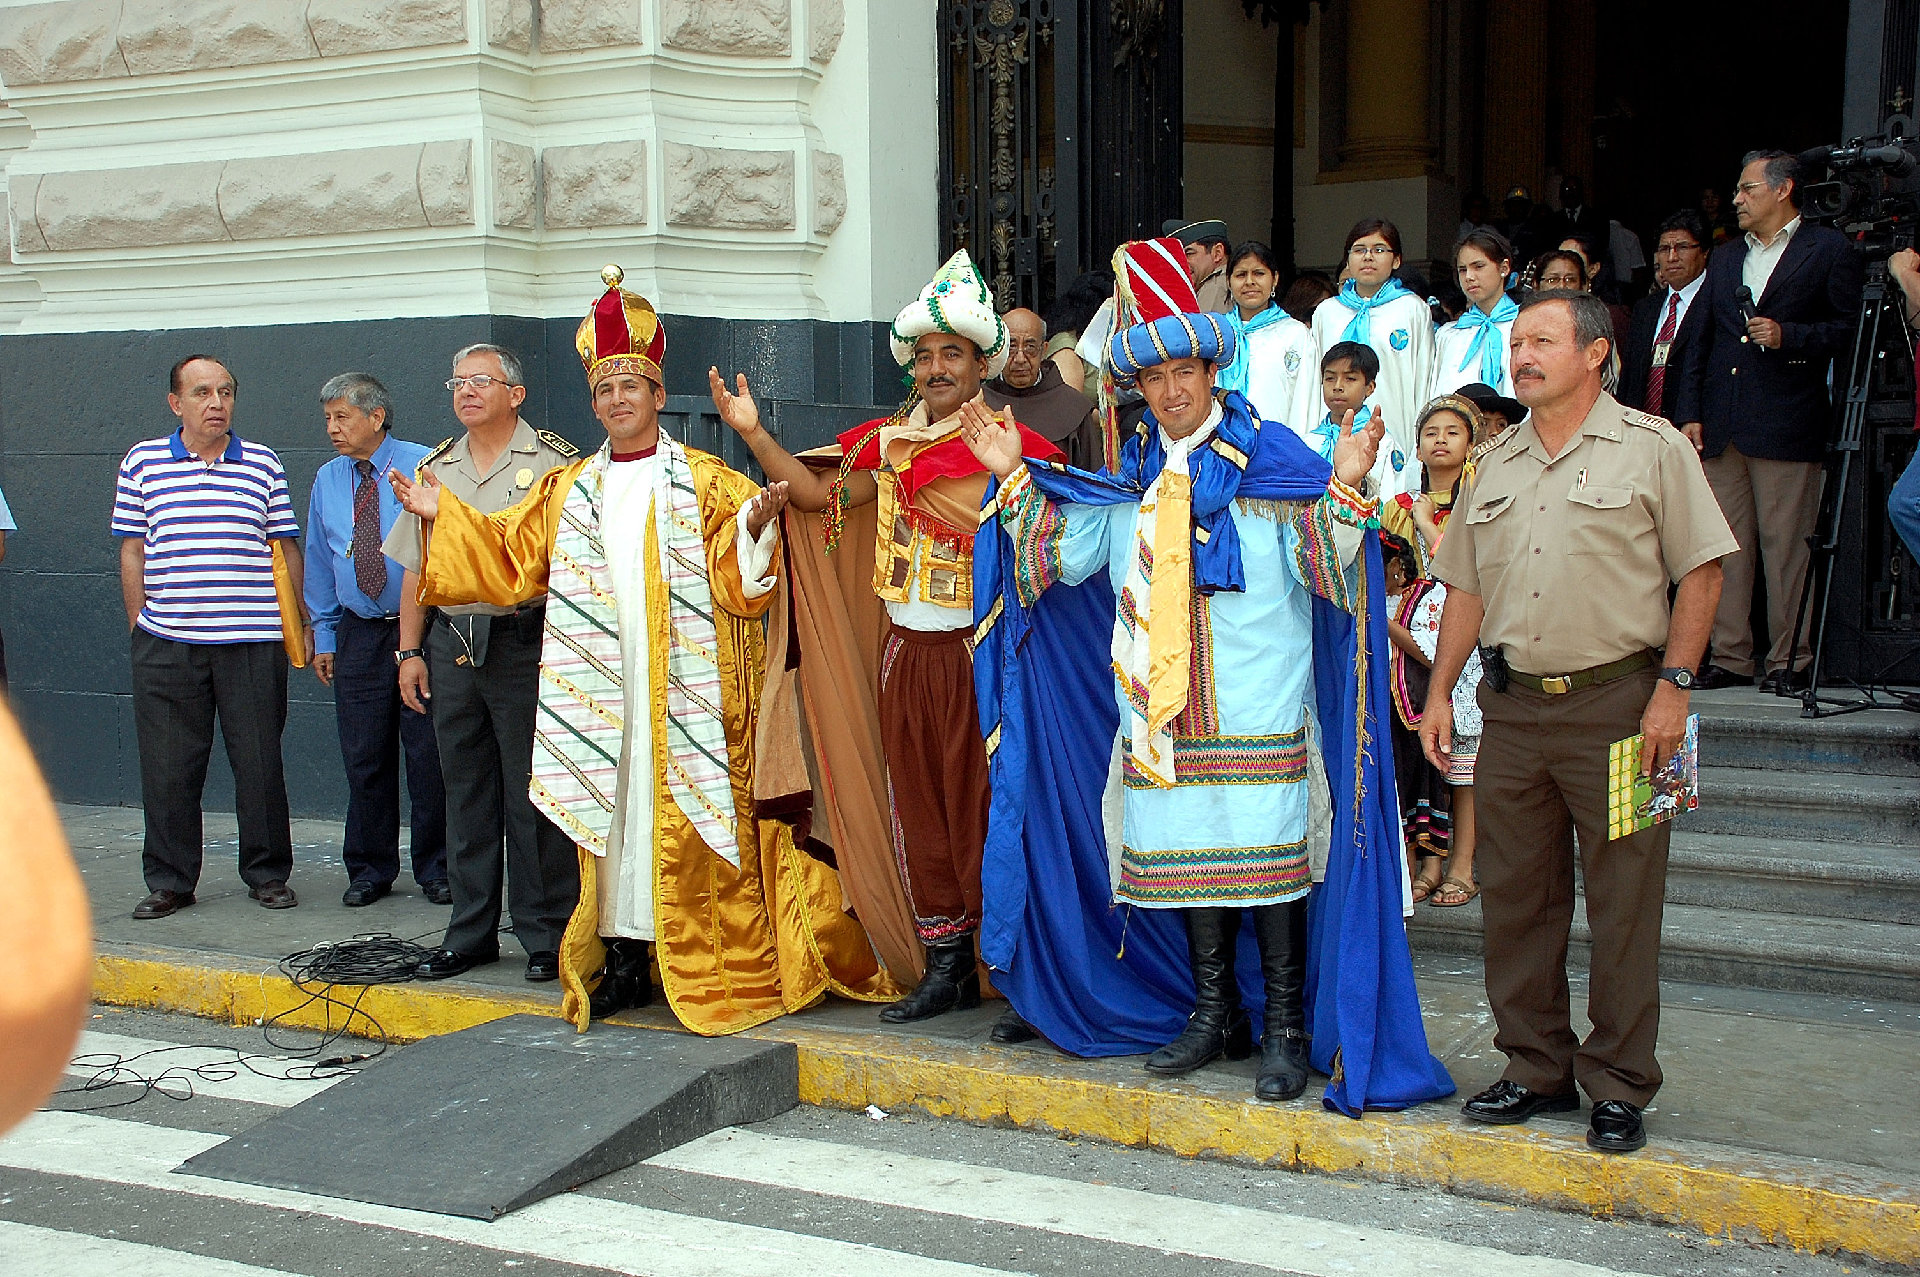 Bajada de Reyes in Lima and Ollantaytambo, Aracari Travel